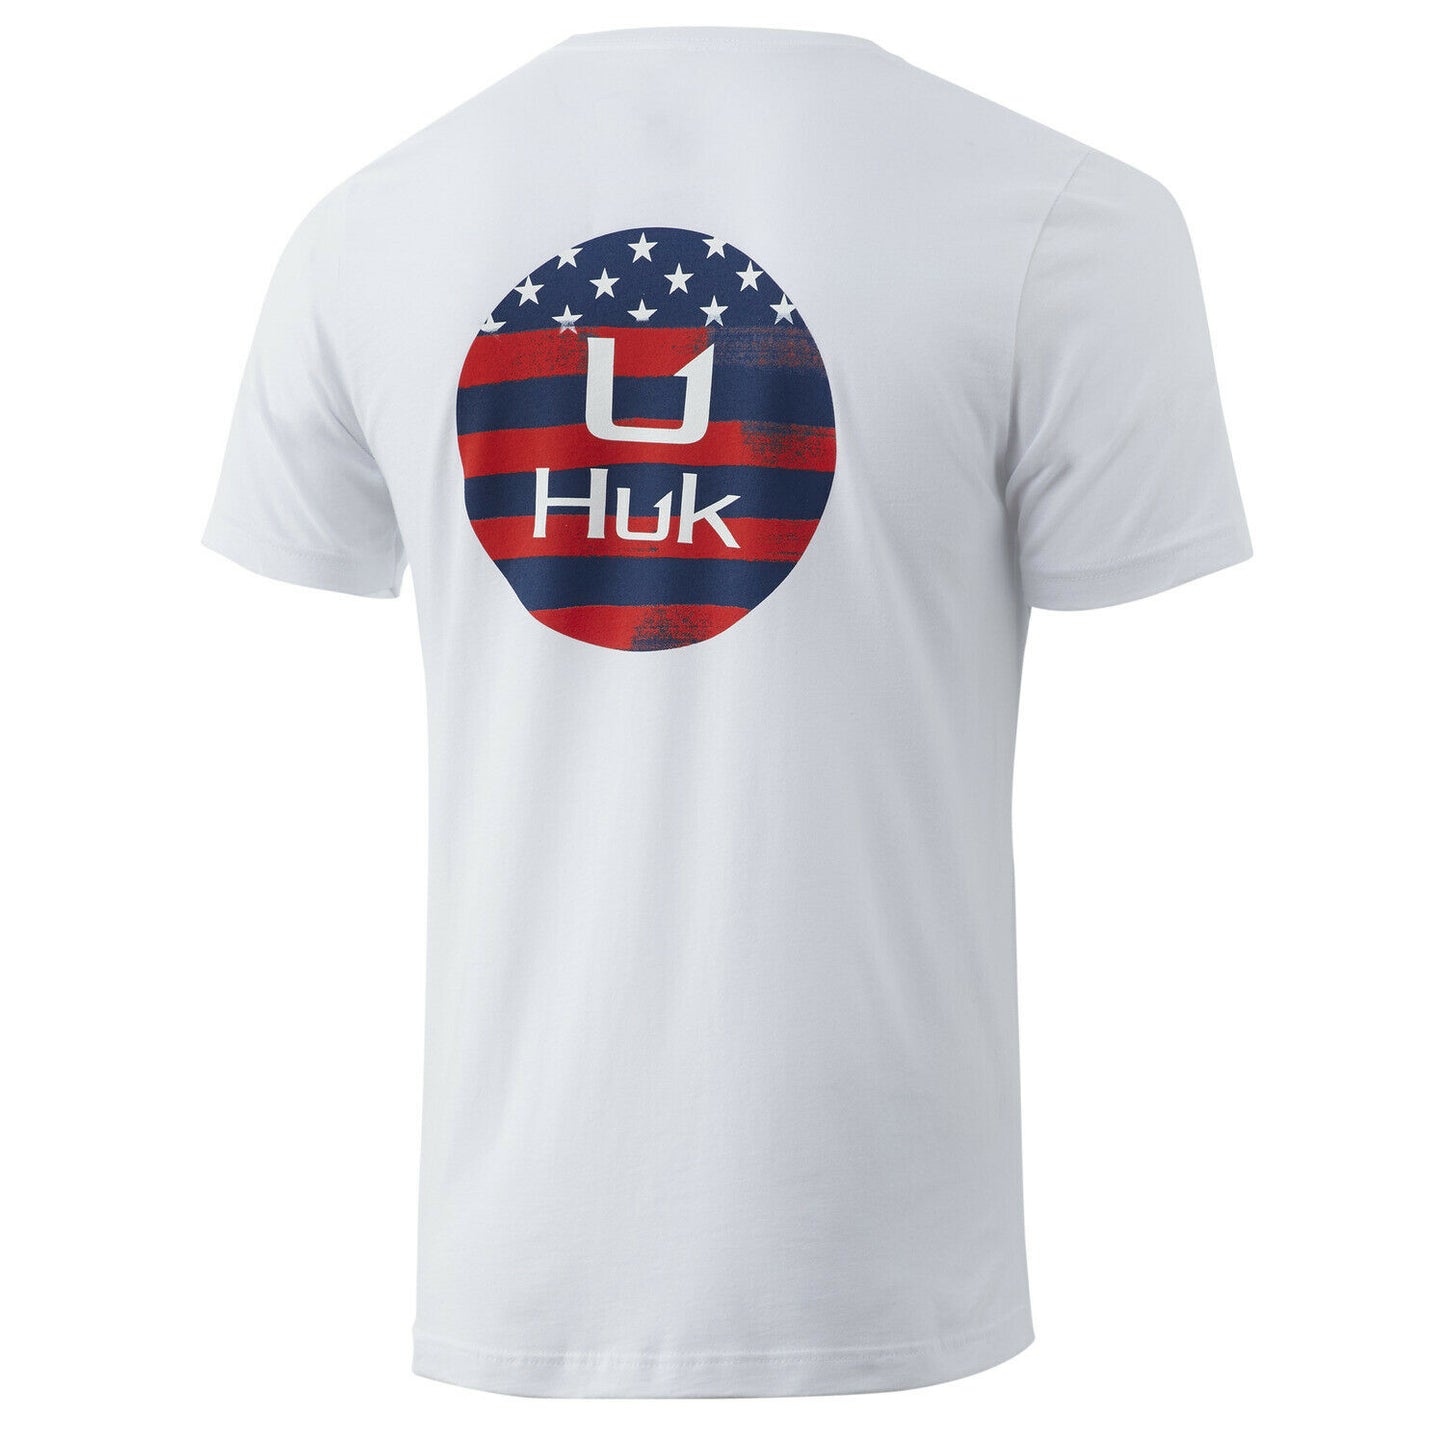 Huk KC American Pride Lightweight Tee H1000261 - Choose Size / Color